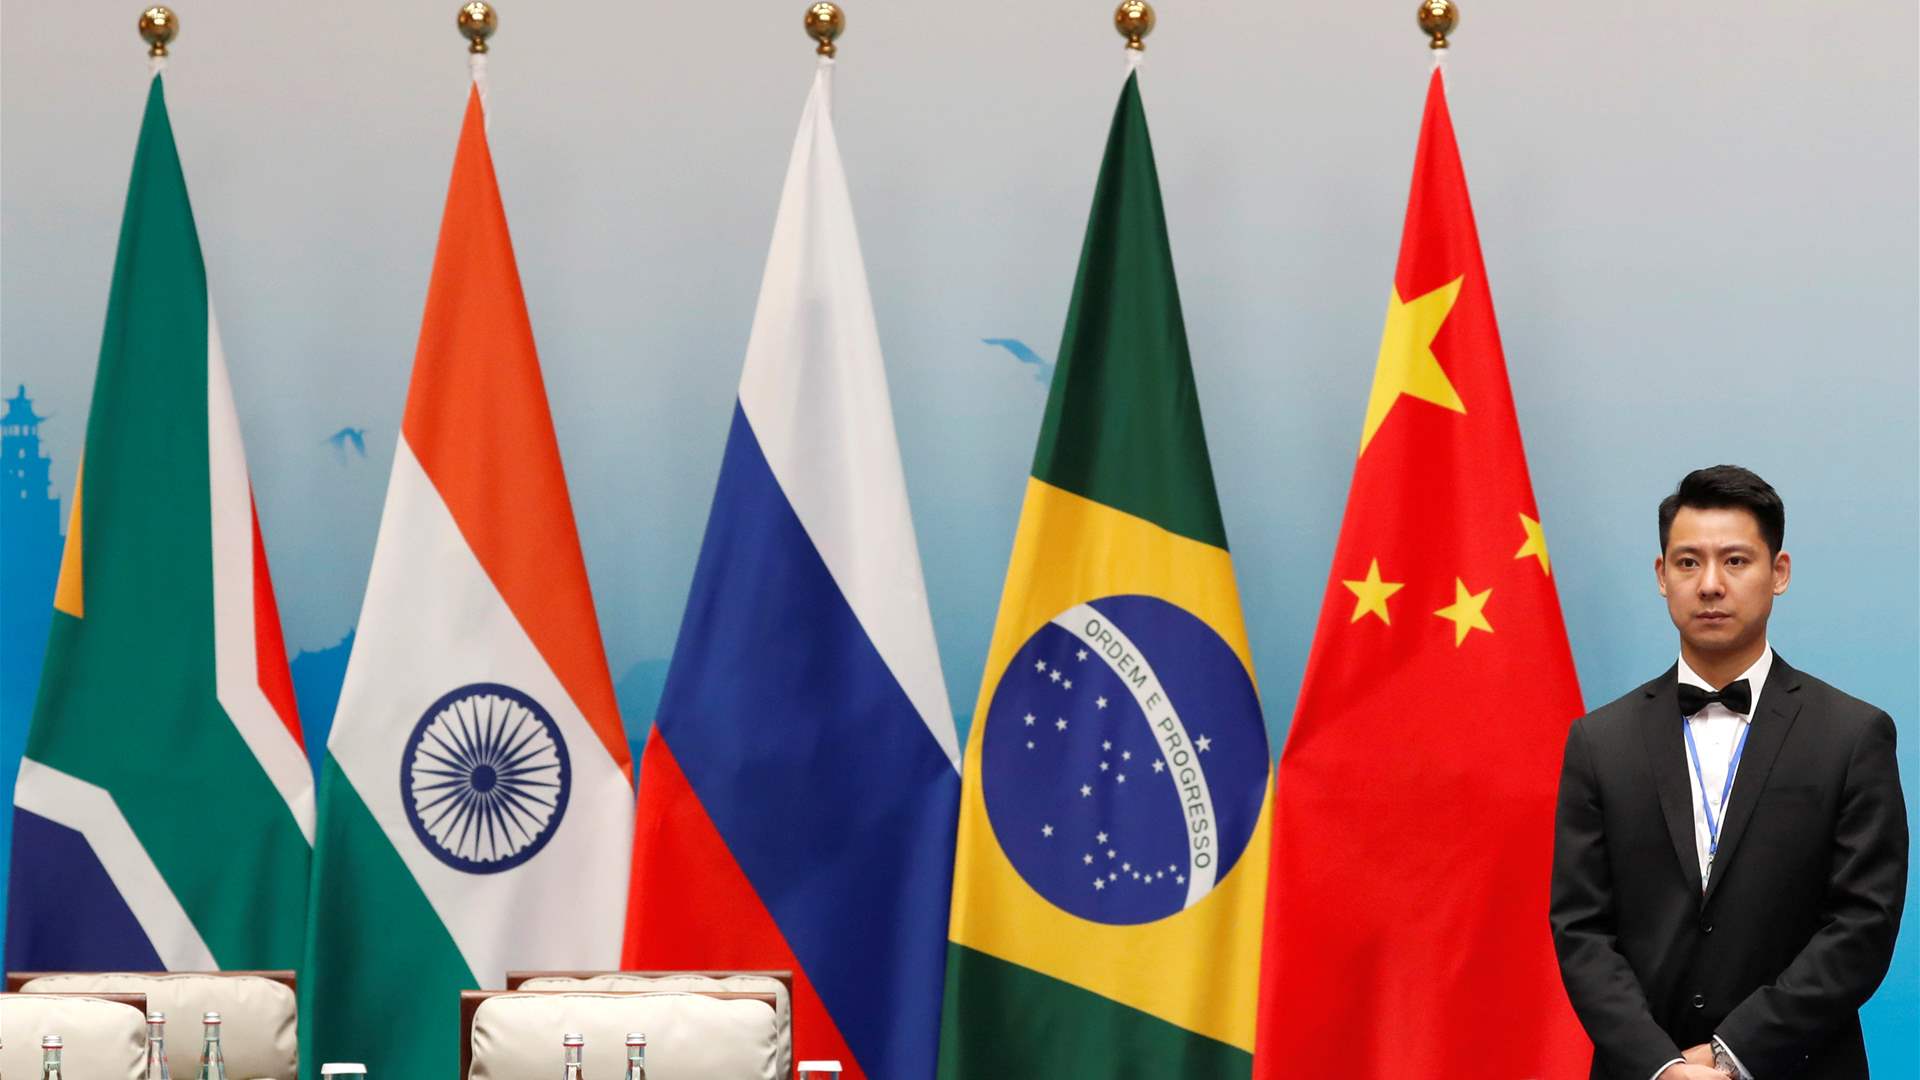 BRICS leaders convene in Johannesburg for Summit on global influence